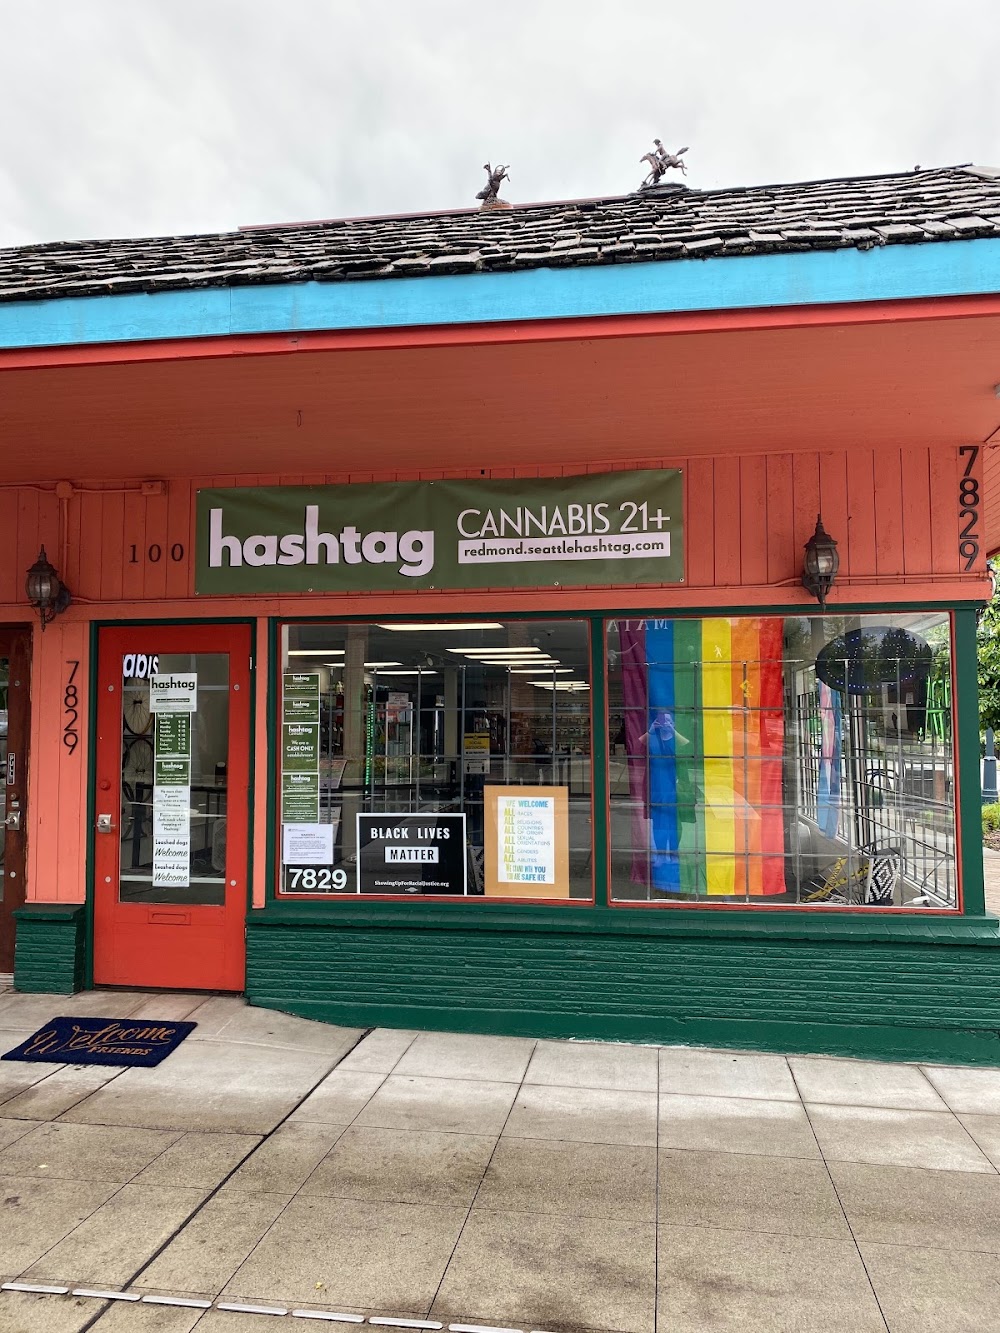 Hashtag Cannabis – Redmond Marijuana Dispensary